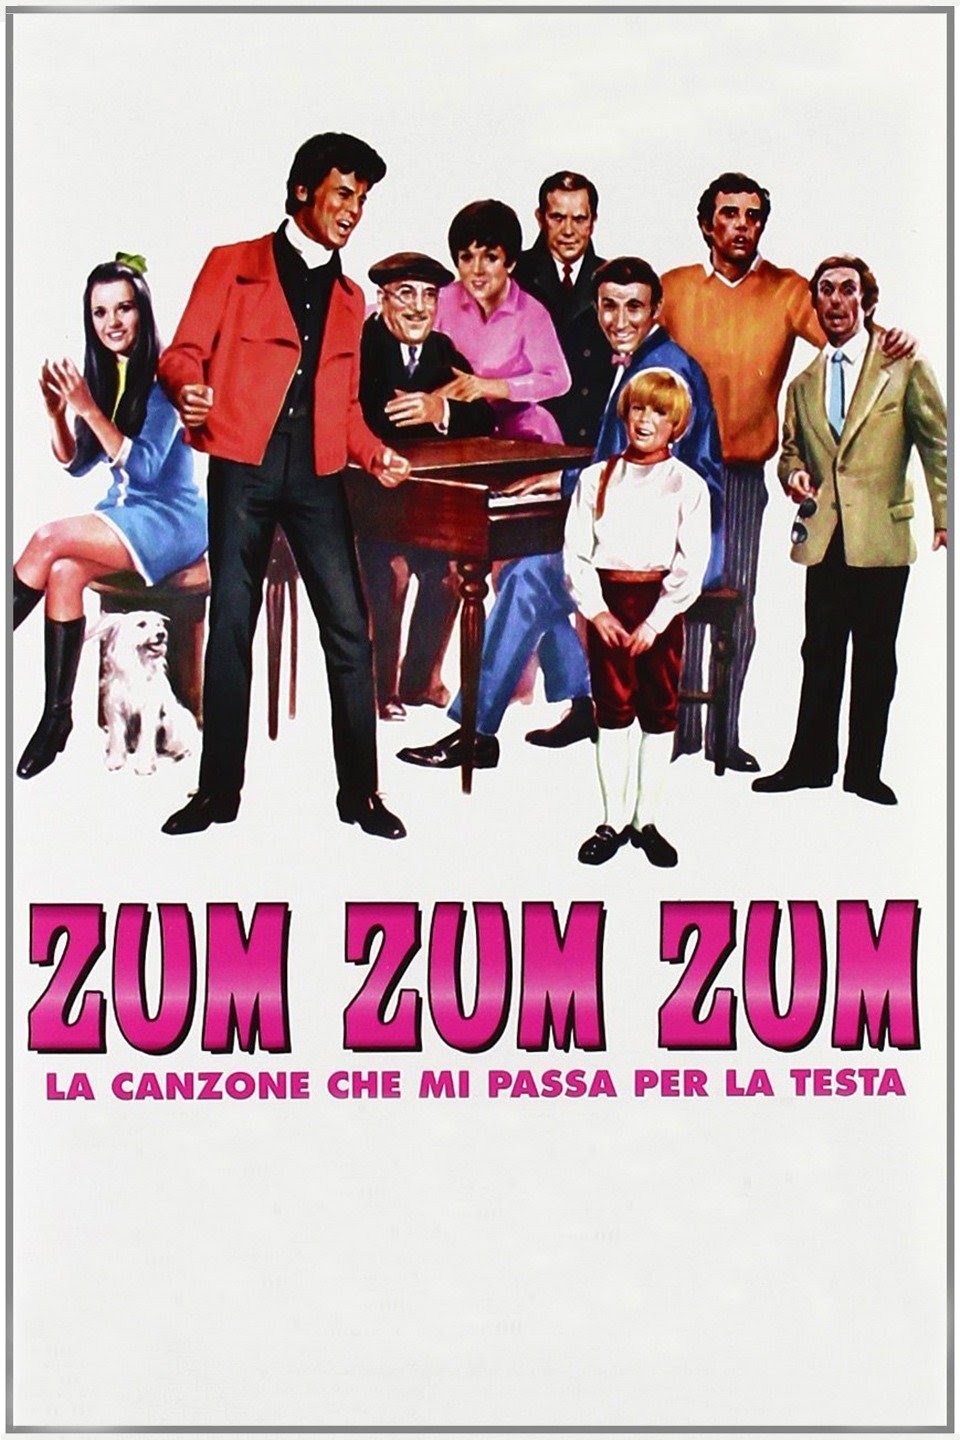 Zum zum zum – La canzone che mi passa… [HD] (1969)